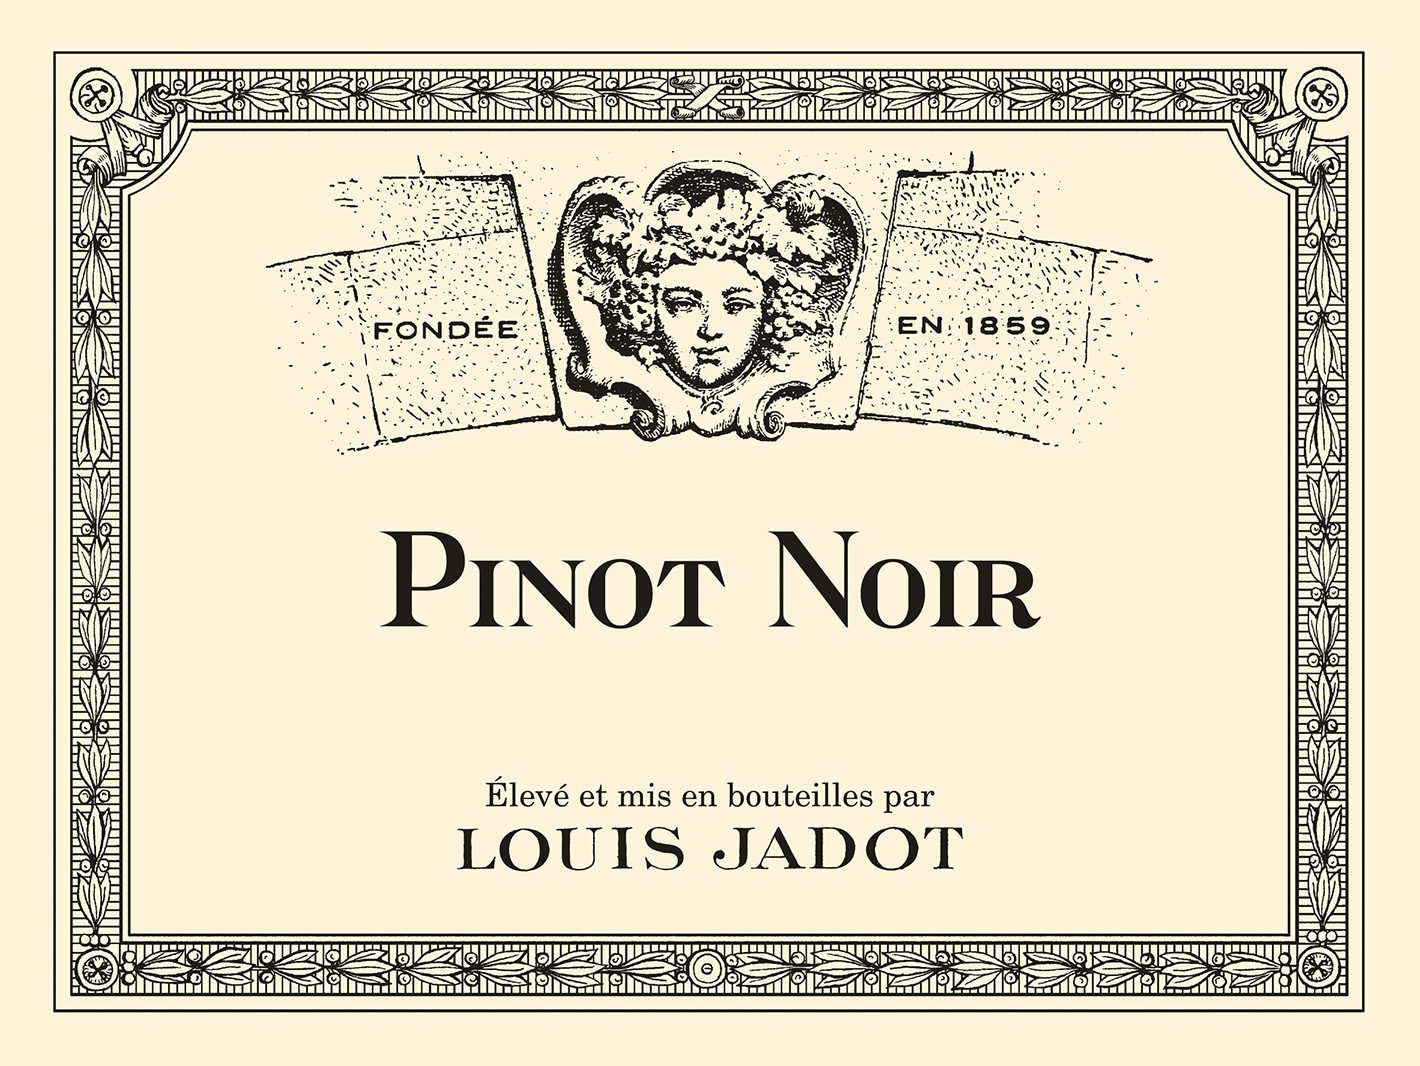 Label of Louis Jadot Pinot Noir